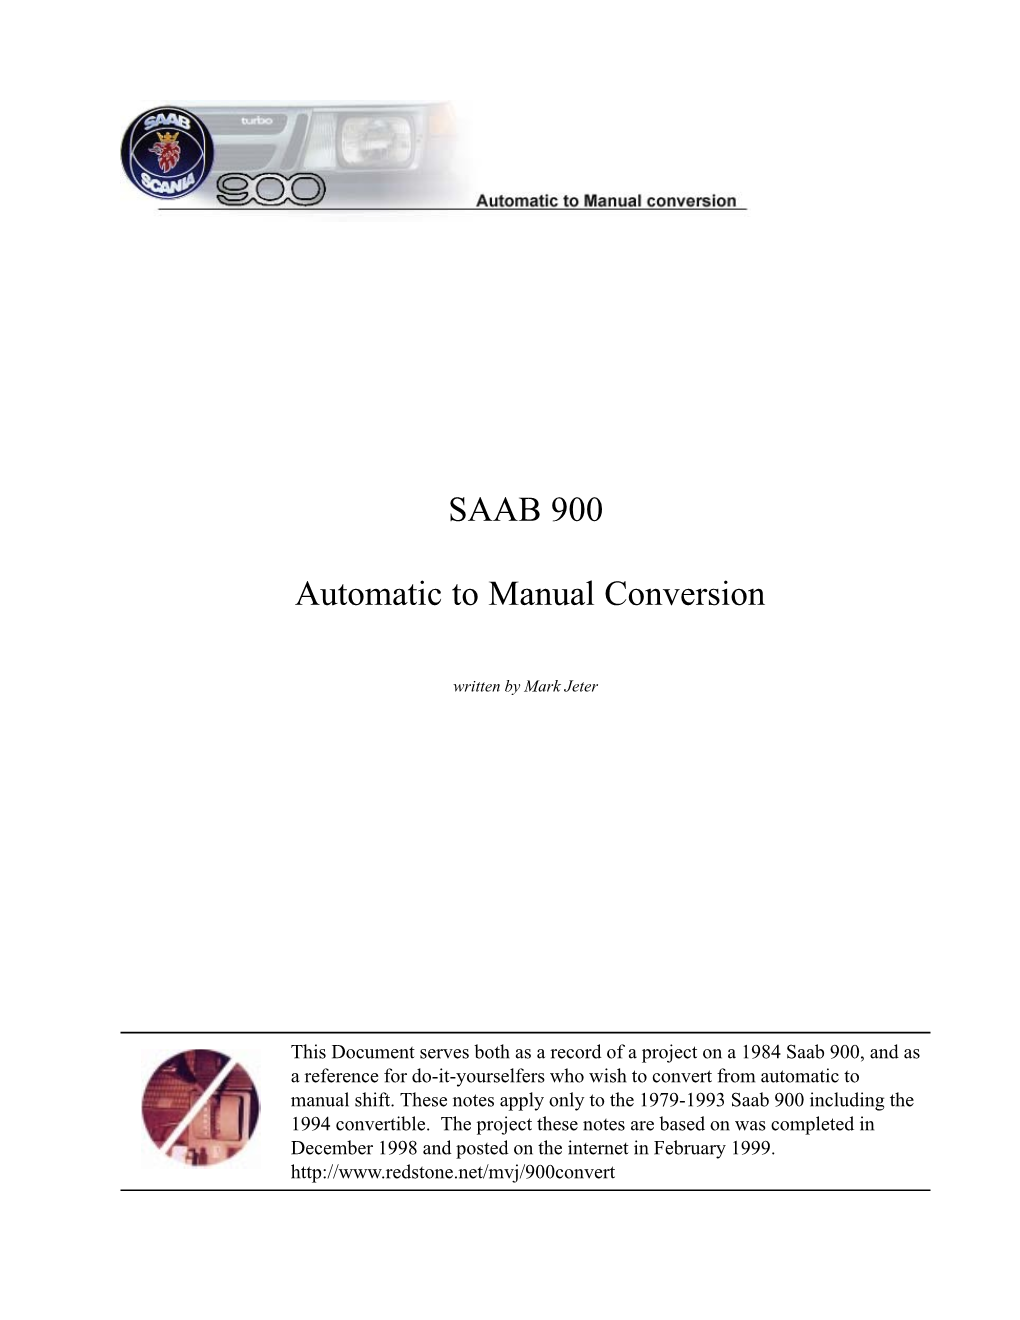 SAAB 900 Automatic to Manual Conversion